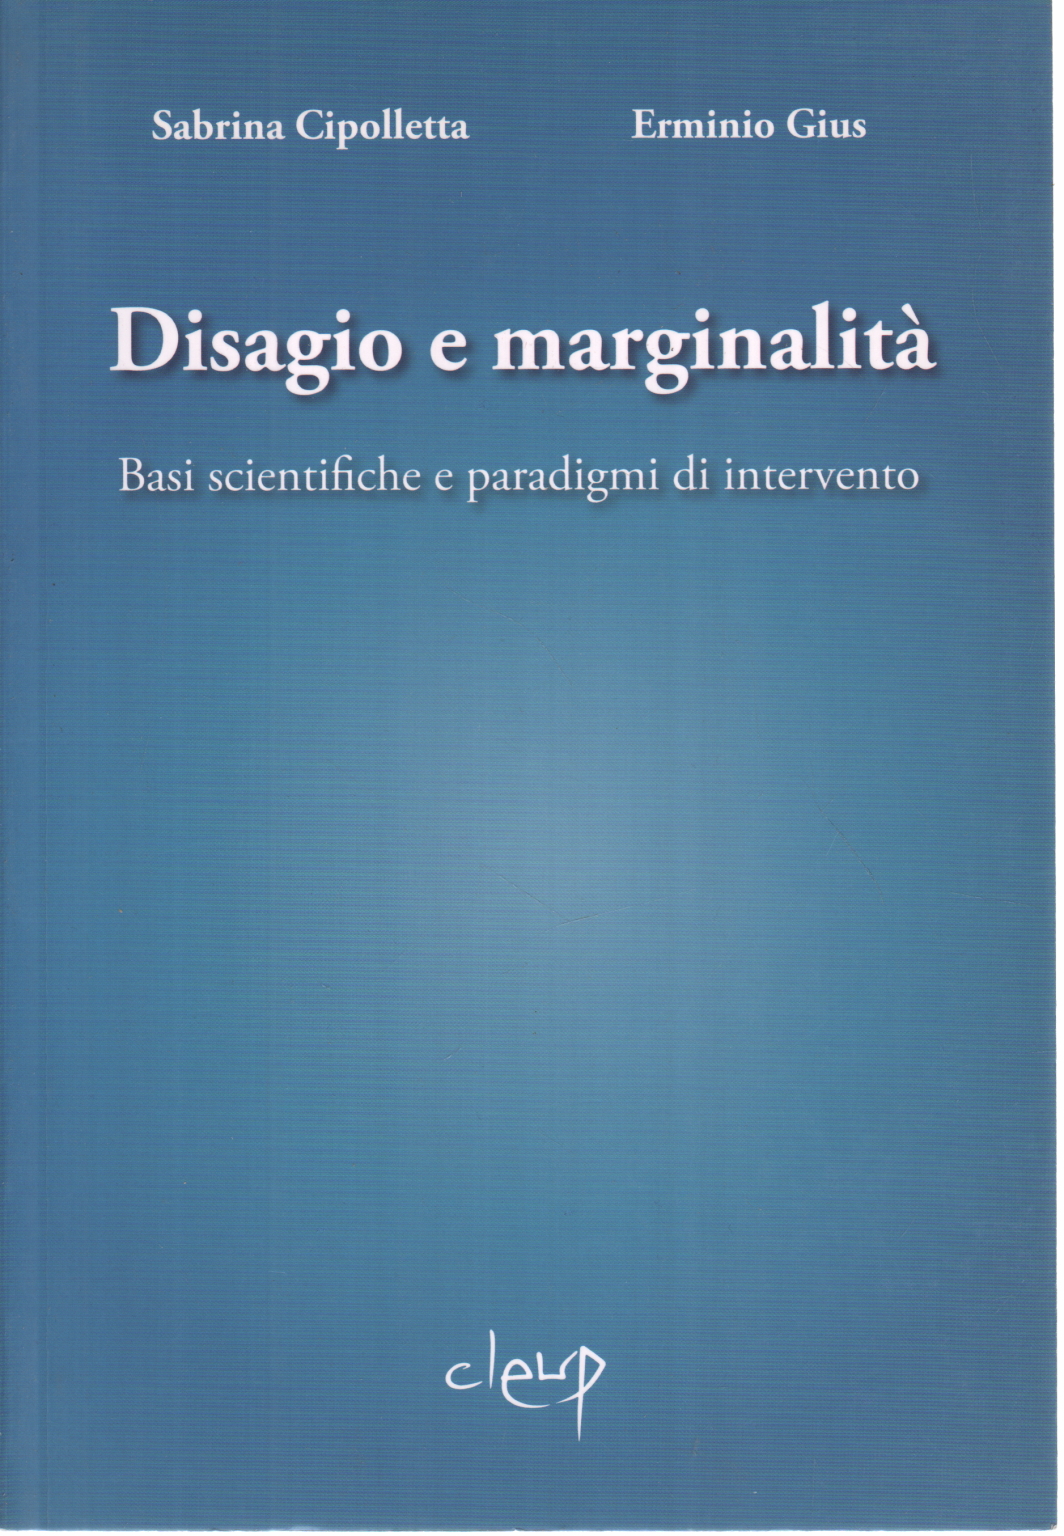 Discomfort, marginality, Sabrina Cipolletta Erminio Gius